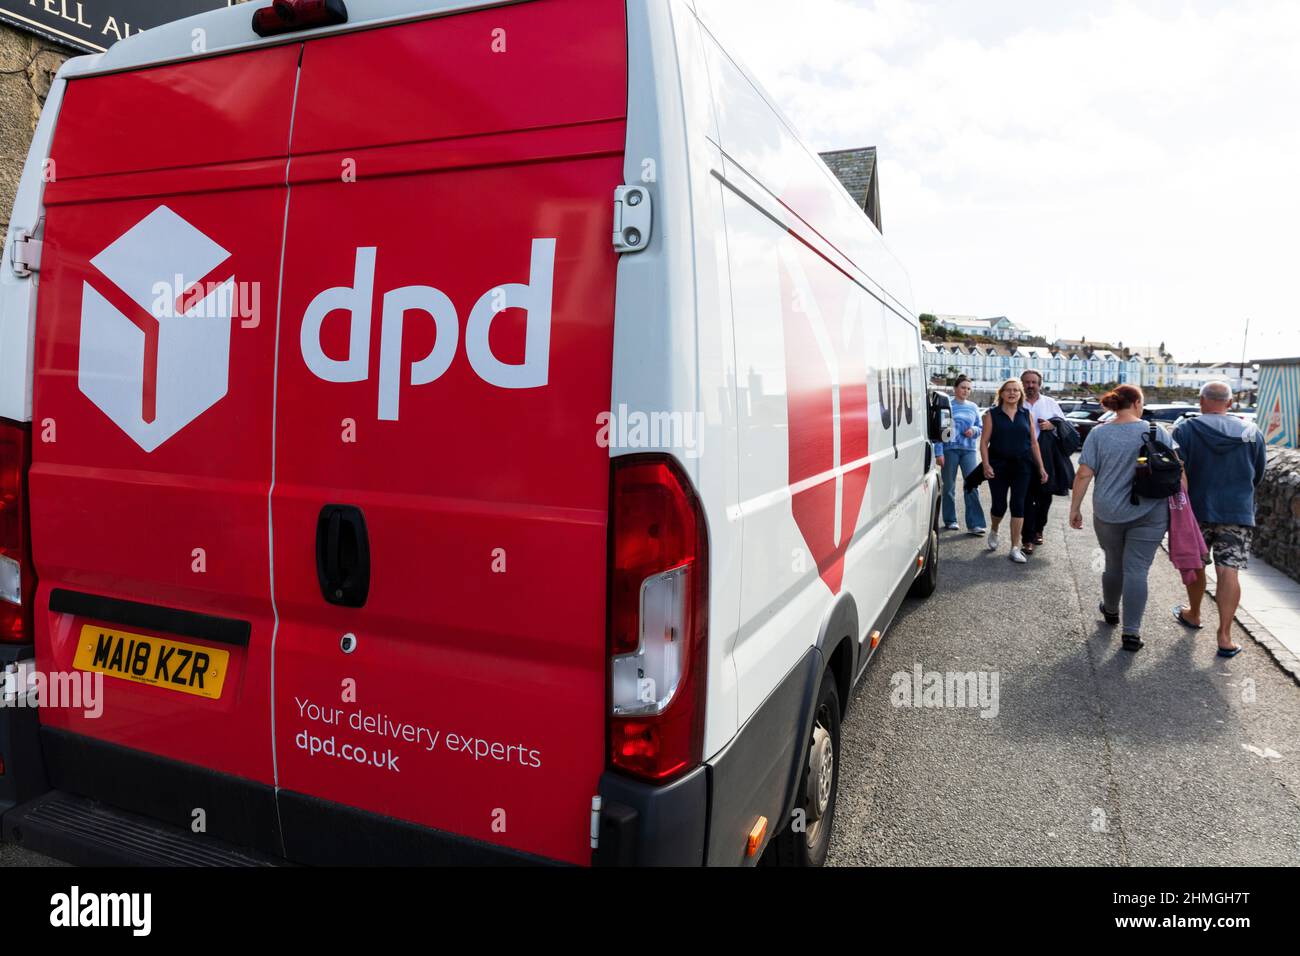 DPD, entrega DPD, furgoneta DPD, furgoneta DPD, señal DPD, Logotipo DPD, vehículo DPD, símbolo DPD, entrega de paquetes DPD, entrega, DPD logística, logística, Foto de stock